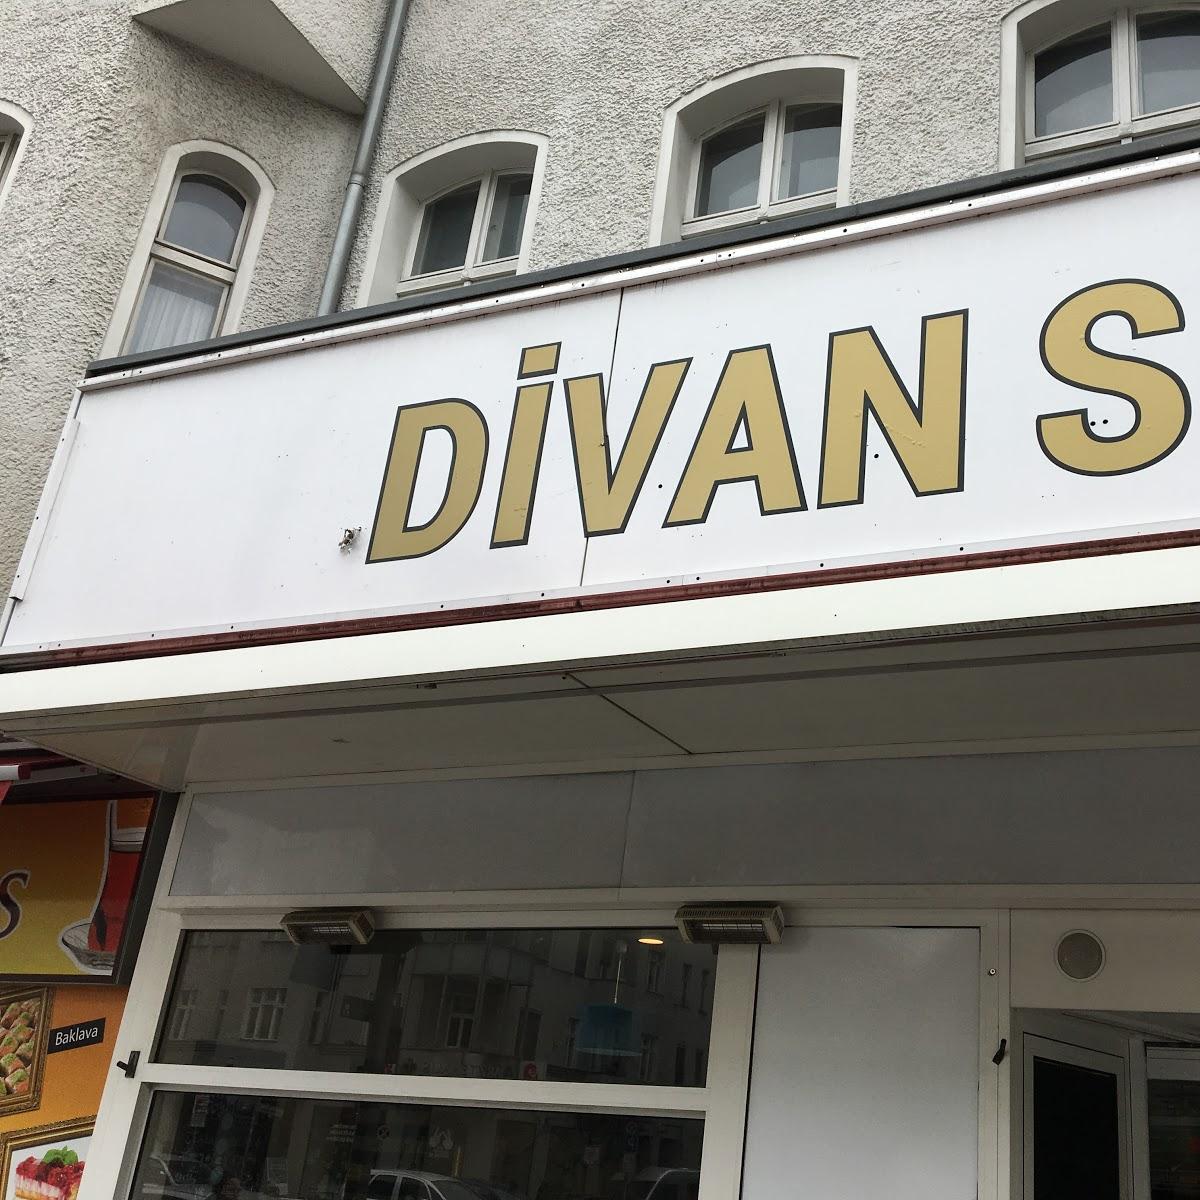 Restaurant "Divan Simit Evi - Frühstückshaus" in Berlin